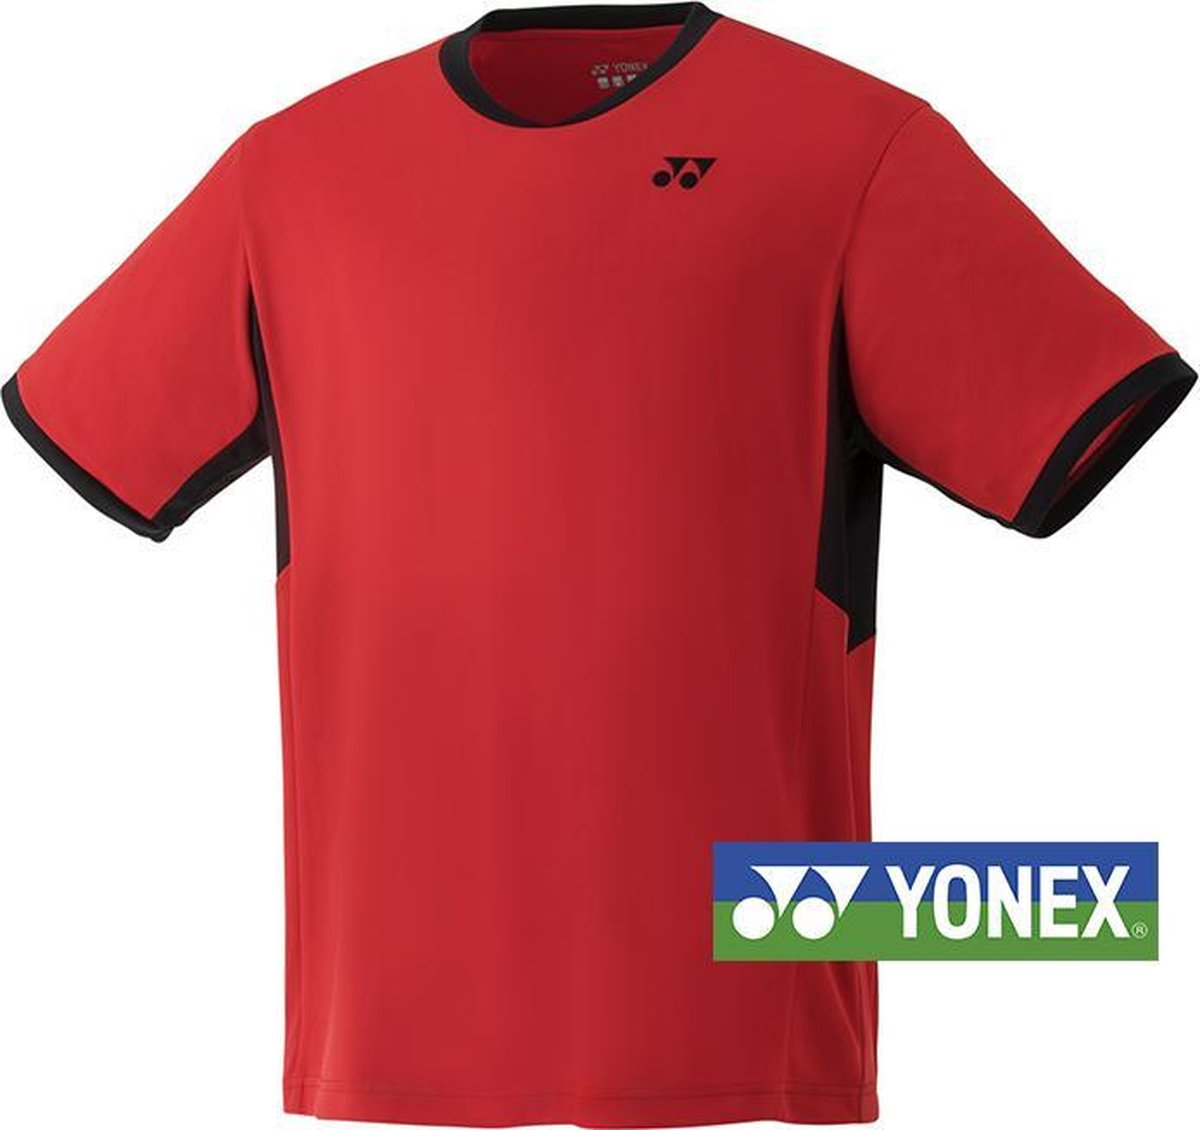 Yonex teamshirt tennis badminton - YM0010 - rood - maat XL